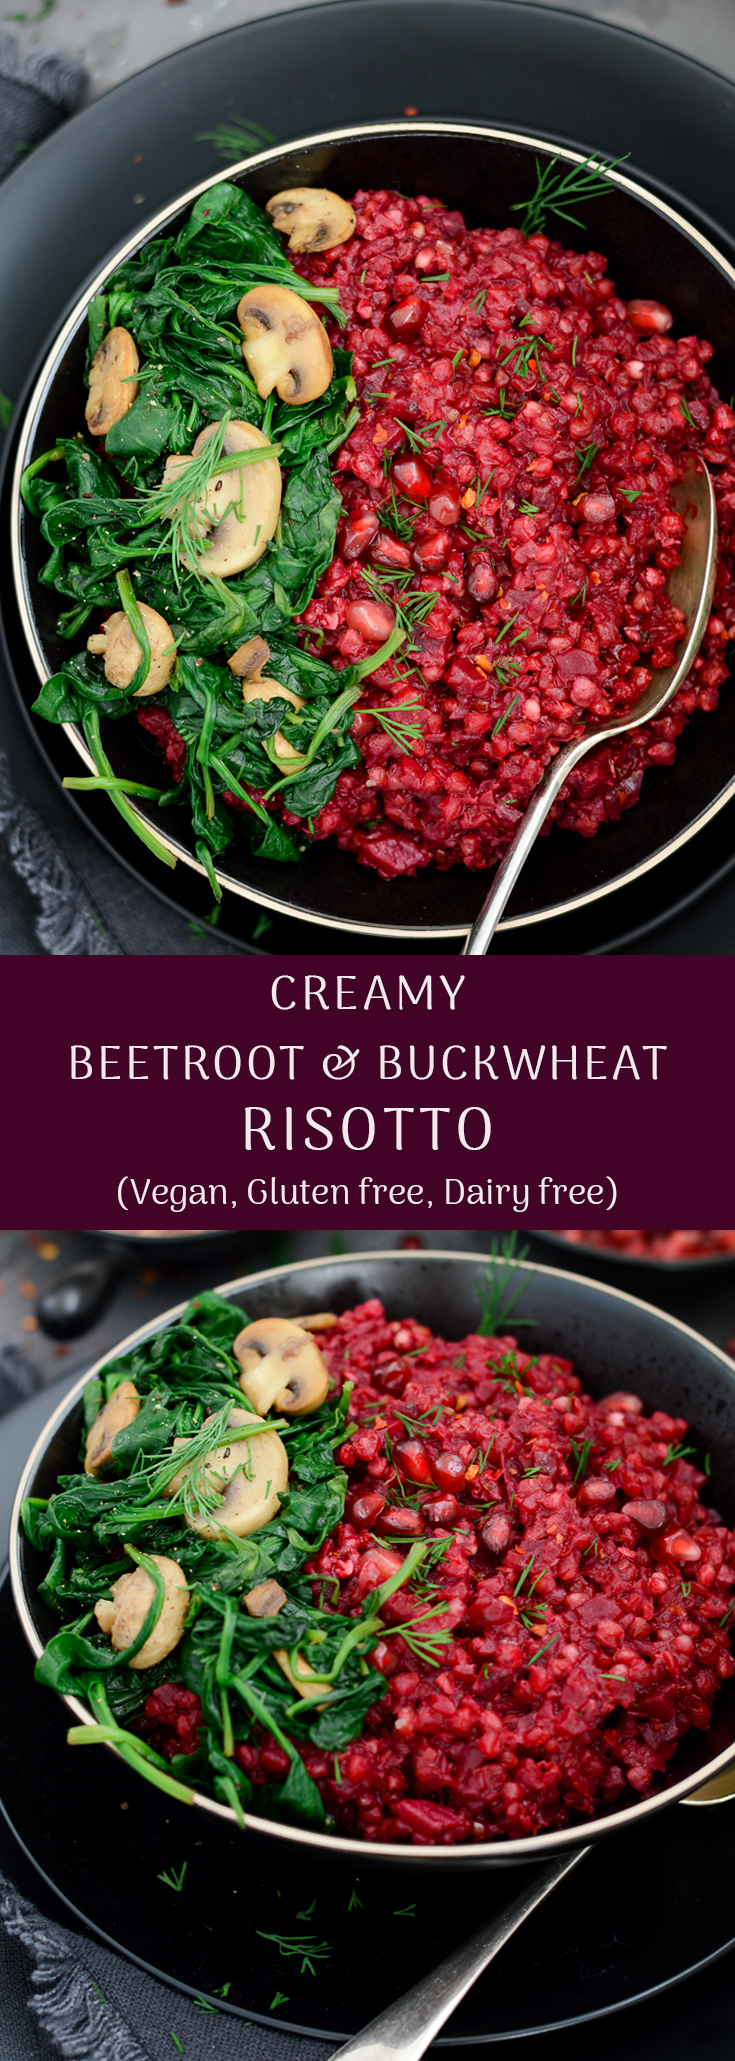 Beetroot & buckwheat risotto #vegan #glutenfree #dairyfree #vegandinner #veganuary #meetfreemonday #comfortfood via @fit.foodie.nutter